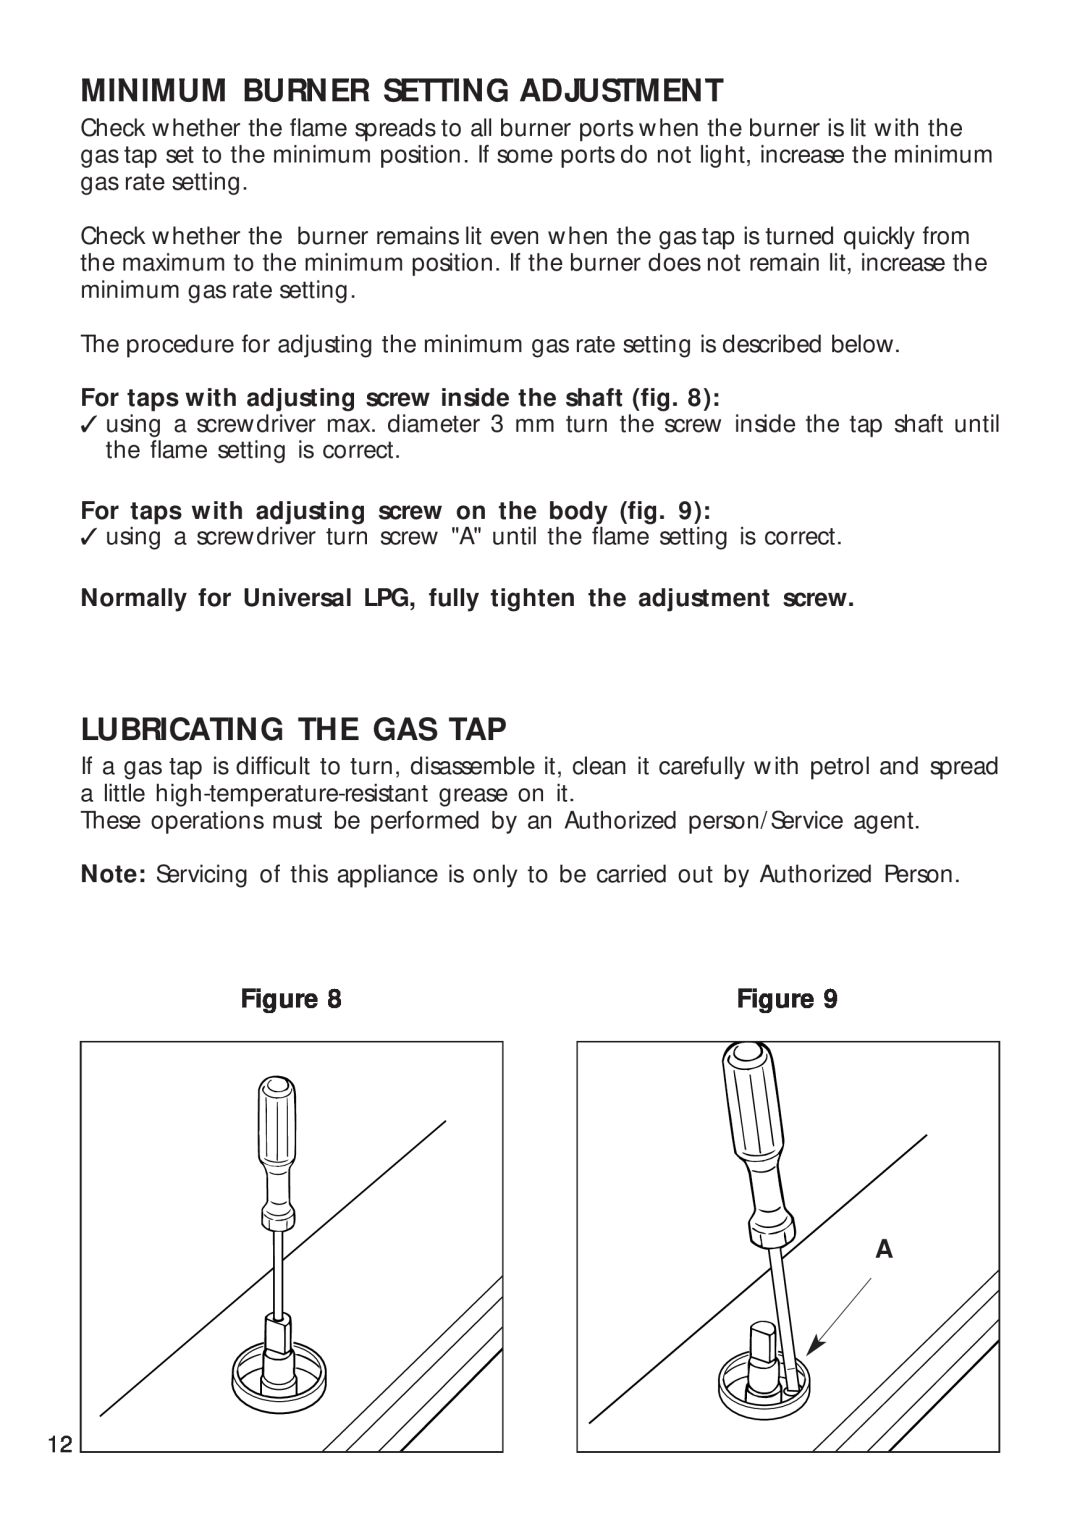 DeLonghi DEGH90WF manual Minimum Burner Setting Adjustment, Lubricating The Gas Tap 